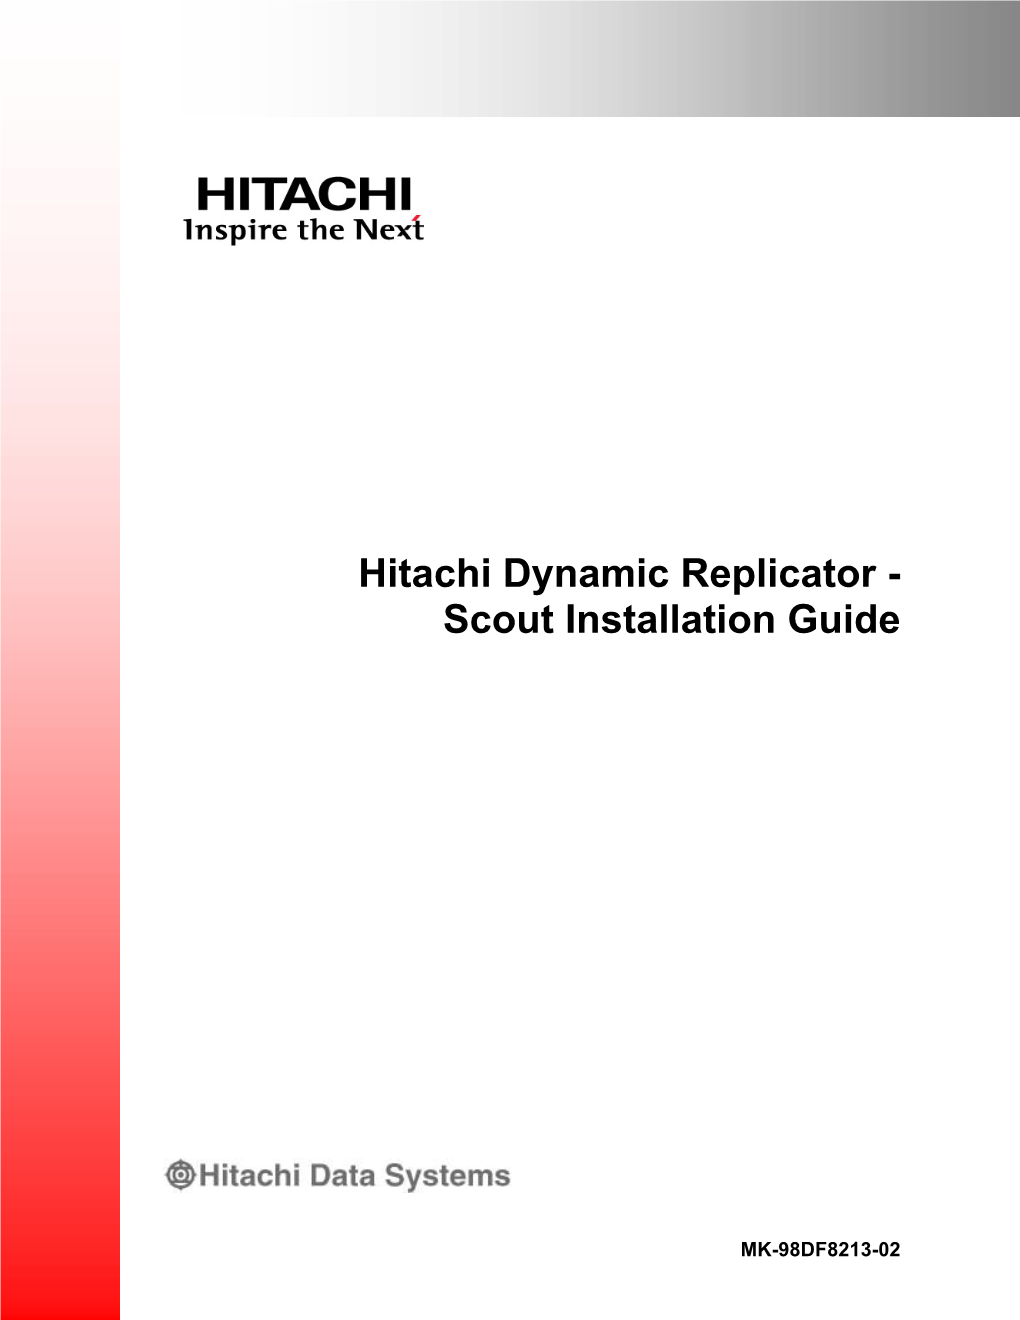 Hiitachi Dynamic Replicator